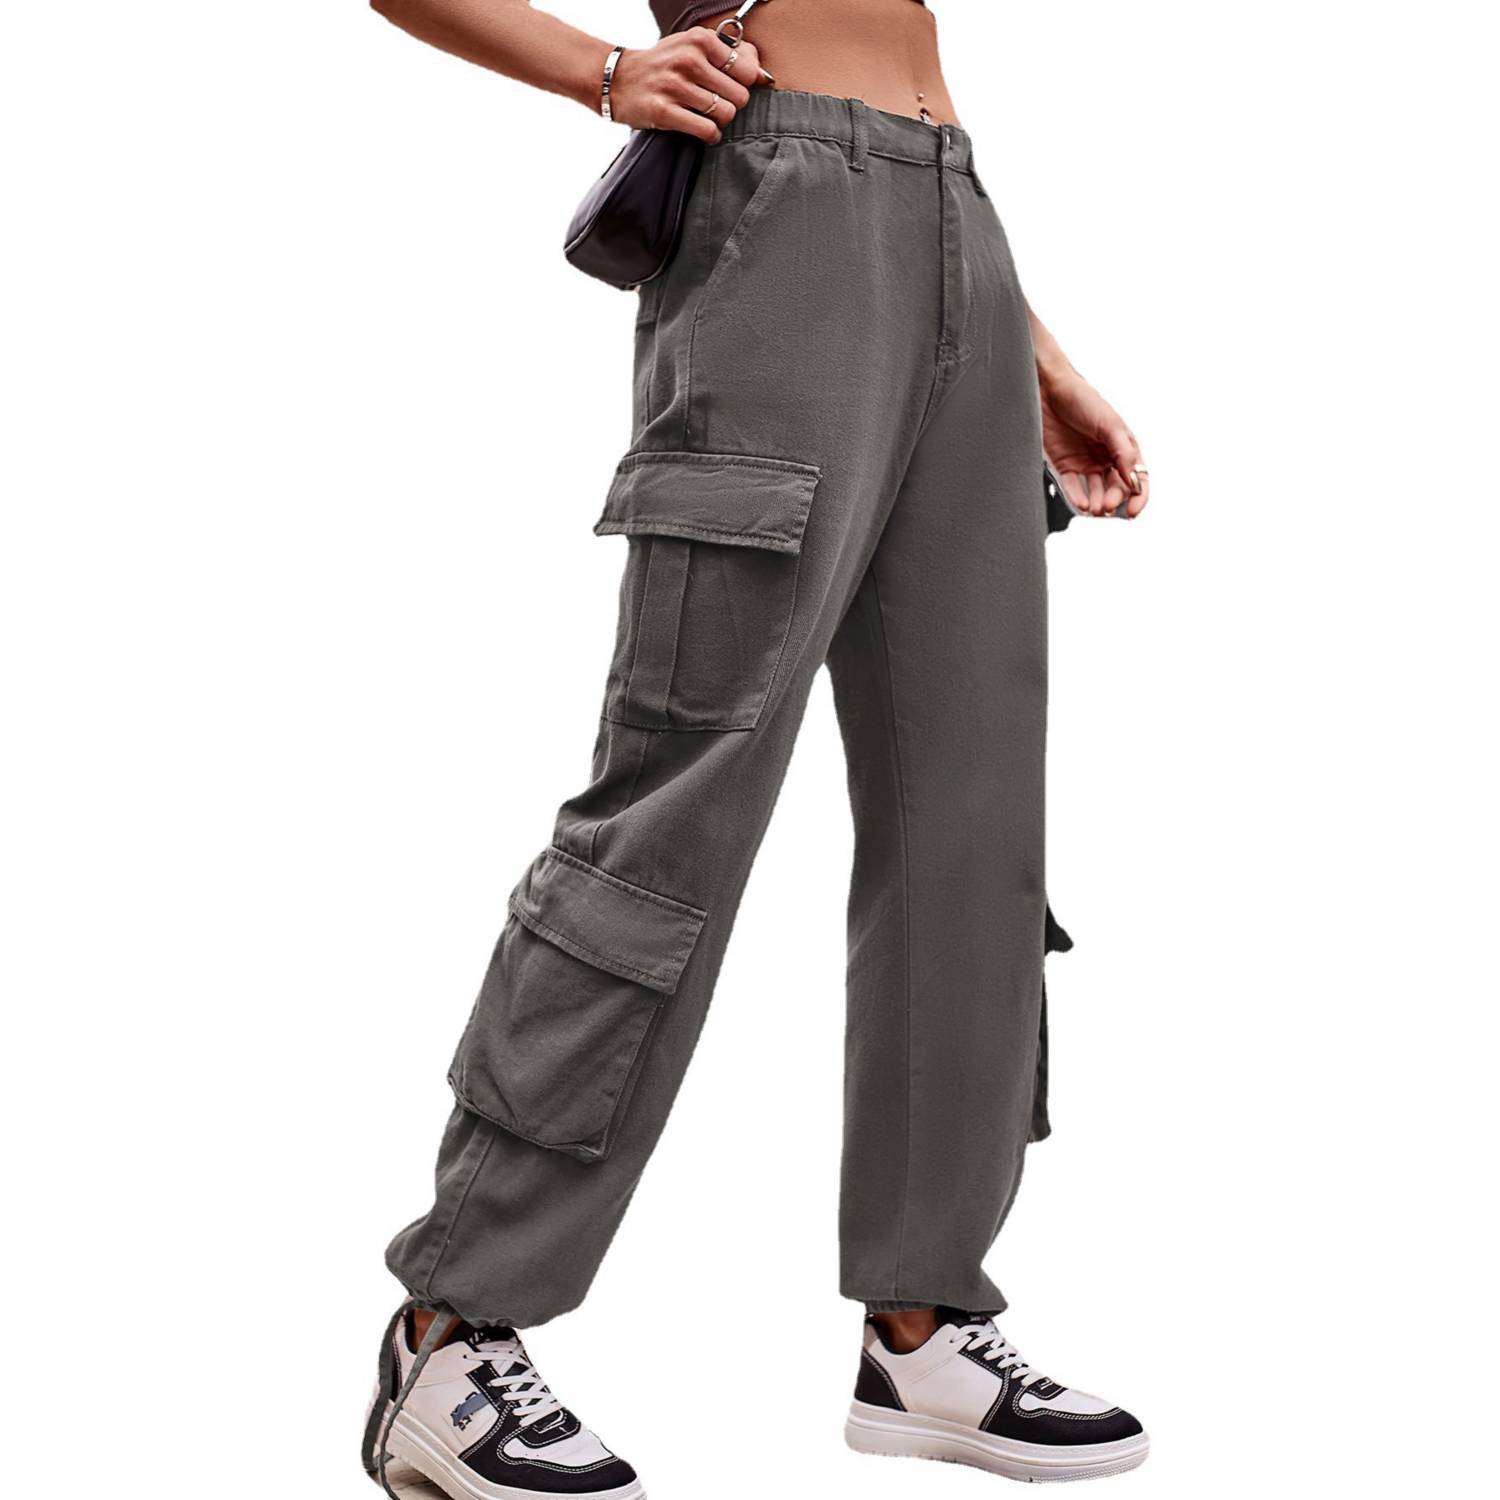 Pantalones de deporte anchos grises de cintura alta